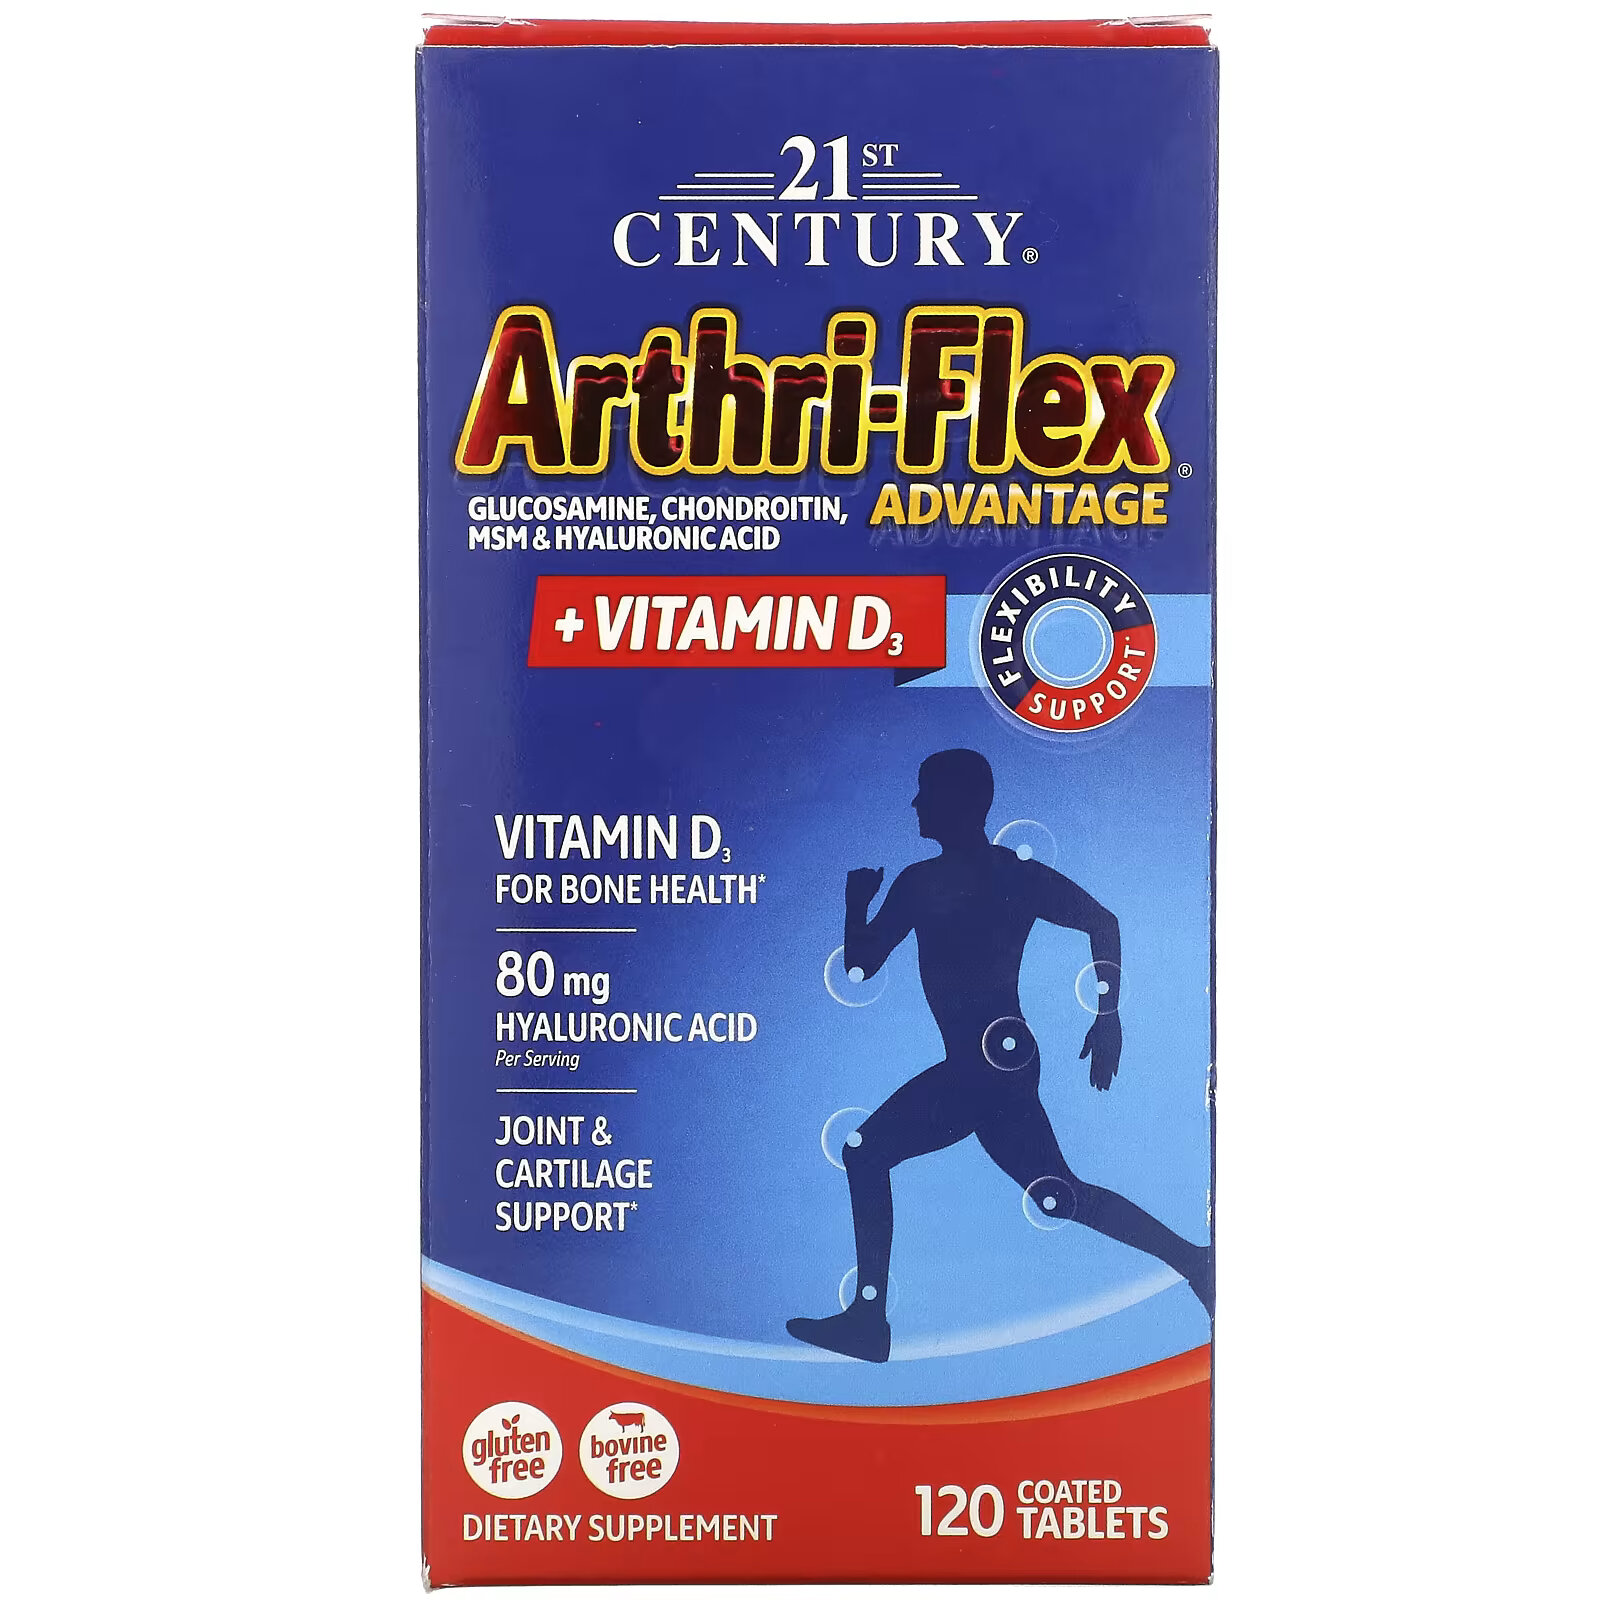 21st Century, Arthri-Flex Advantage с витамином D3, 120 таблеток, покрытых оболочкой 21st century arthri flex advantage с витамином d3 120 таблеток покрытых оболочкой